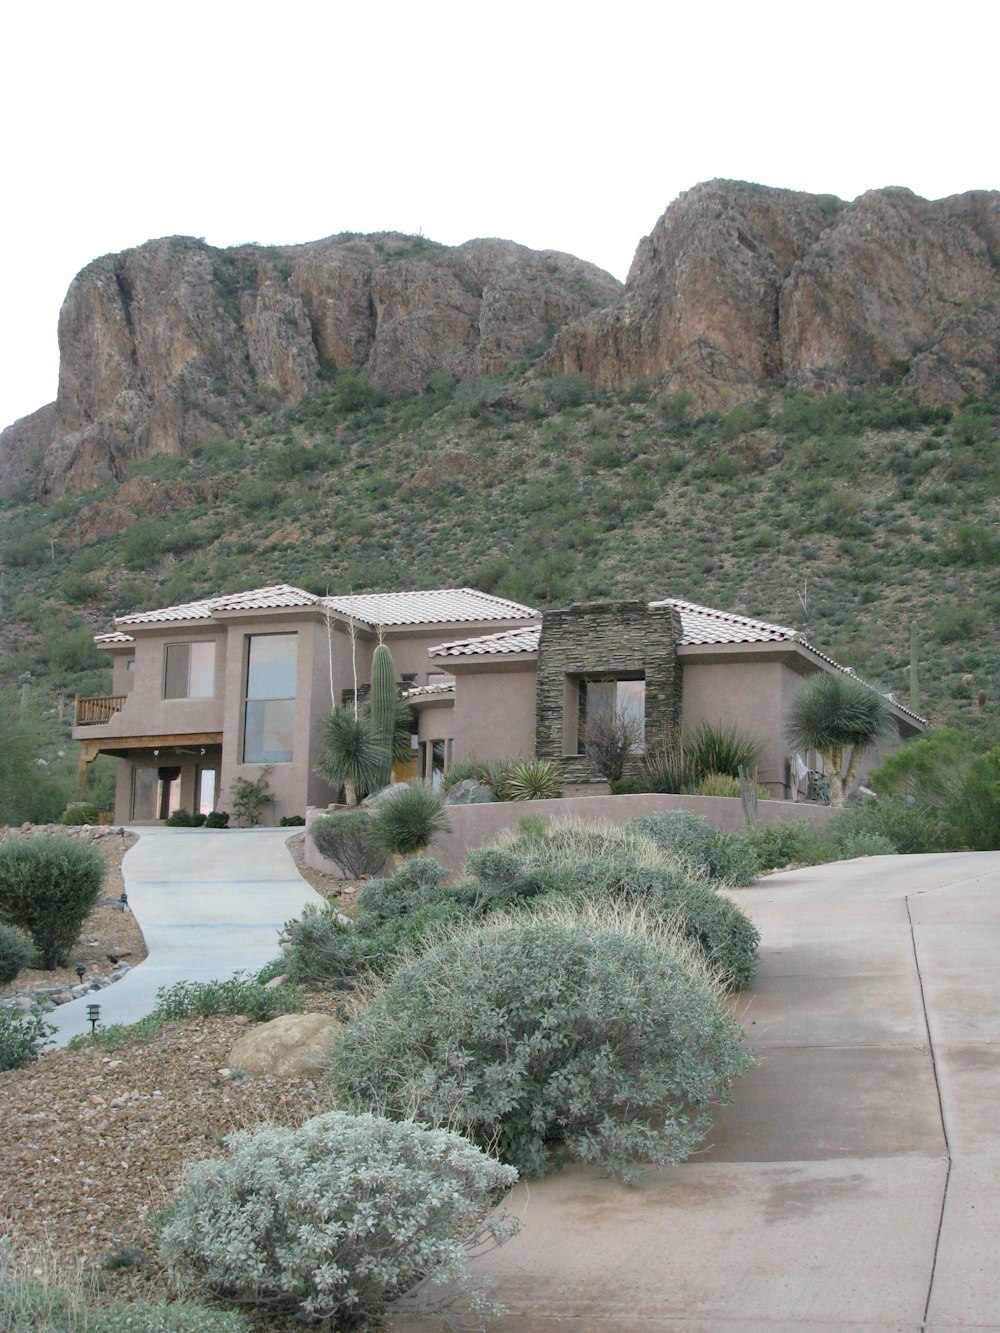 house near rock formation